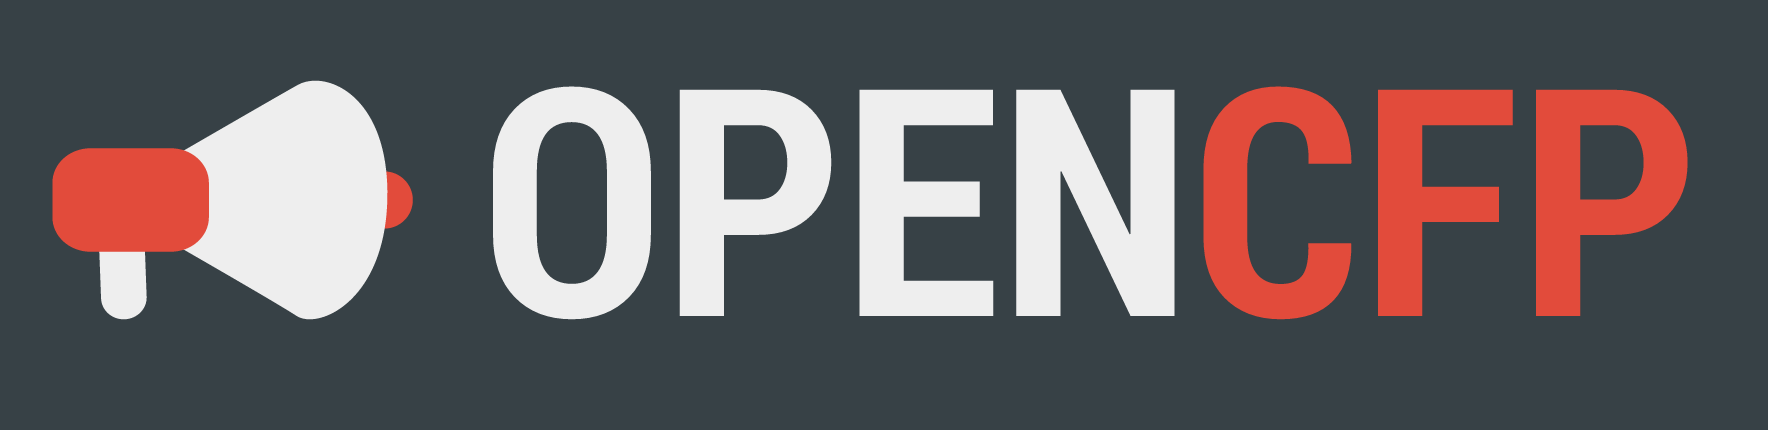 OpenCFP Banner